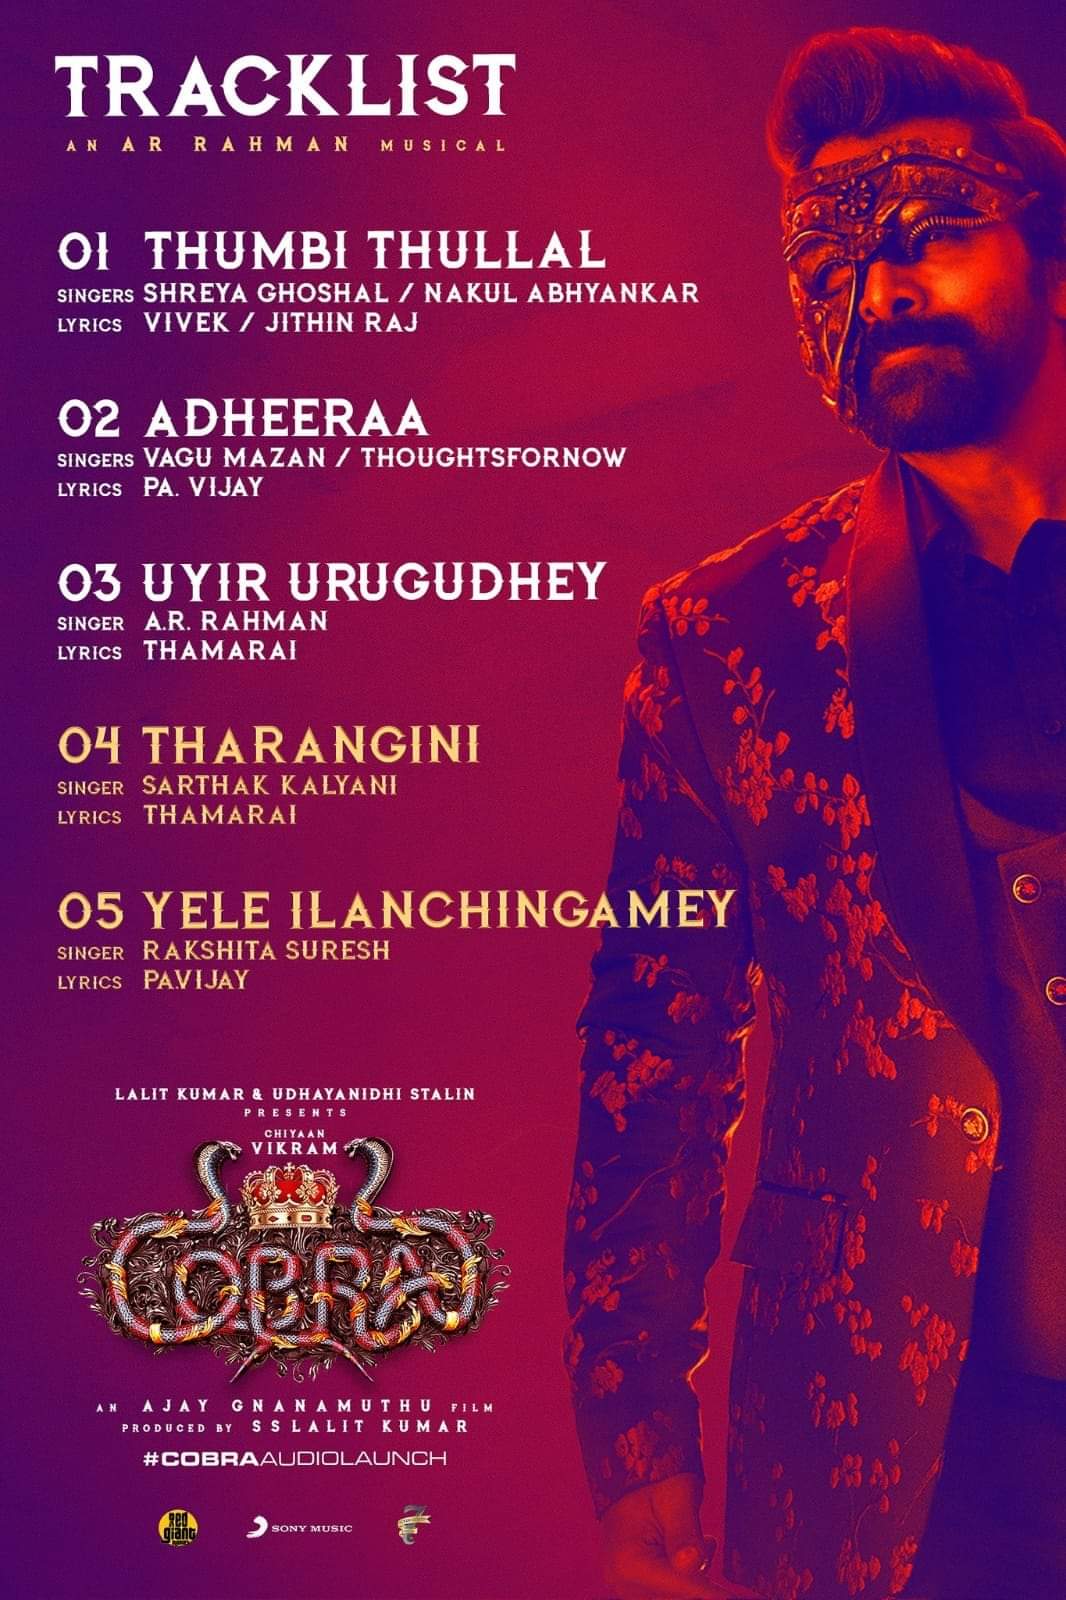 AR Rahman Vikram Cobra Movie Track List Out